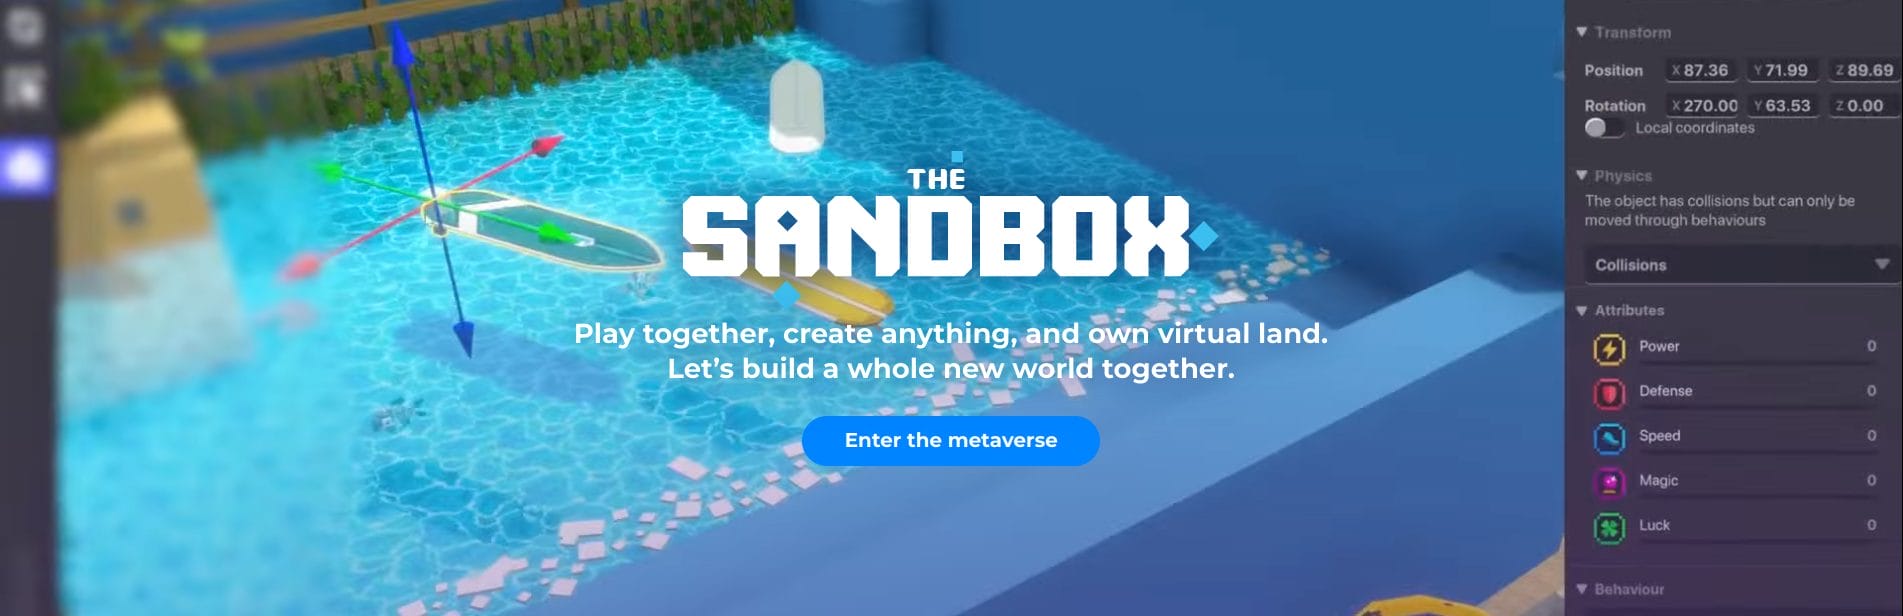 sandbox homepage